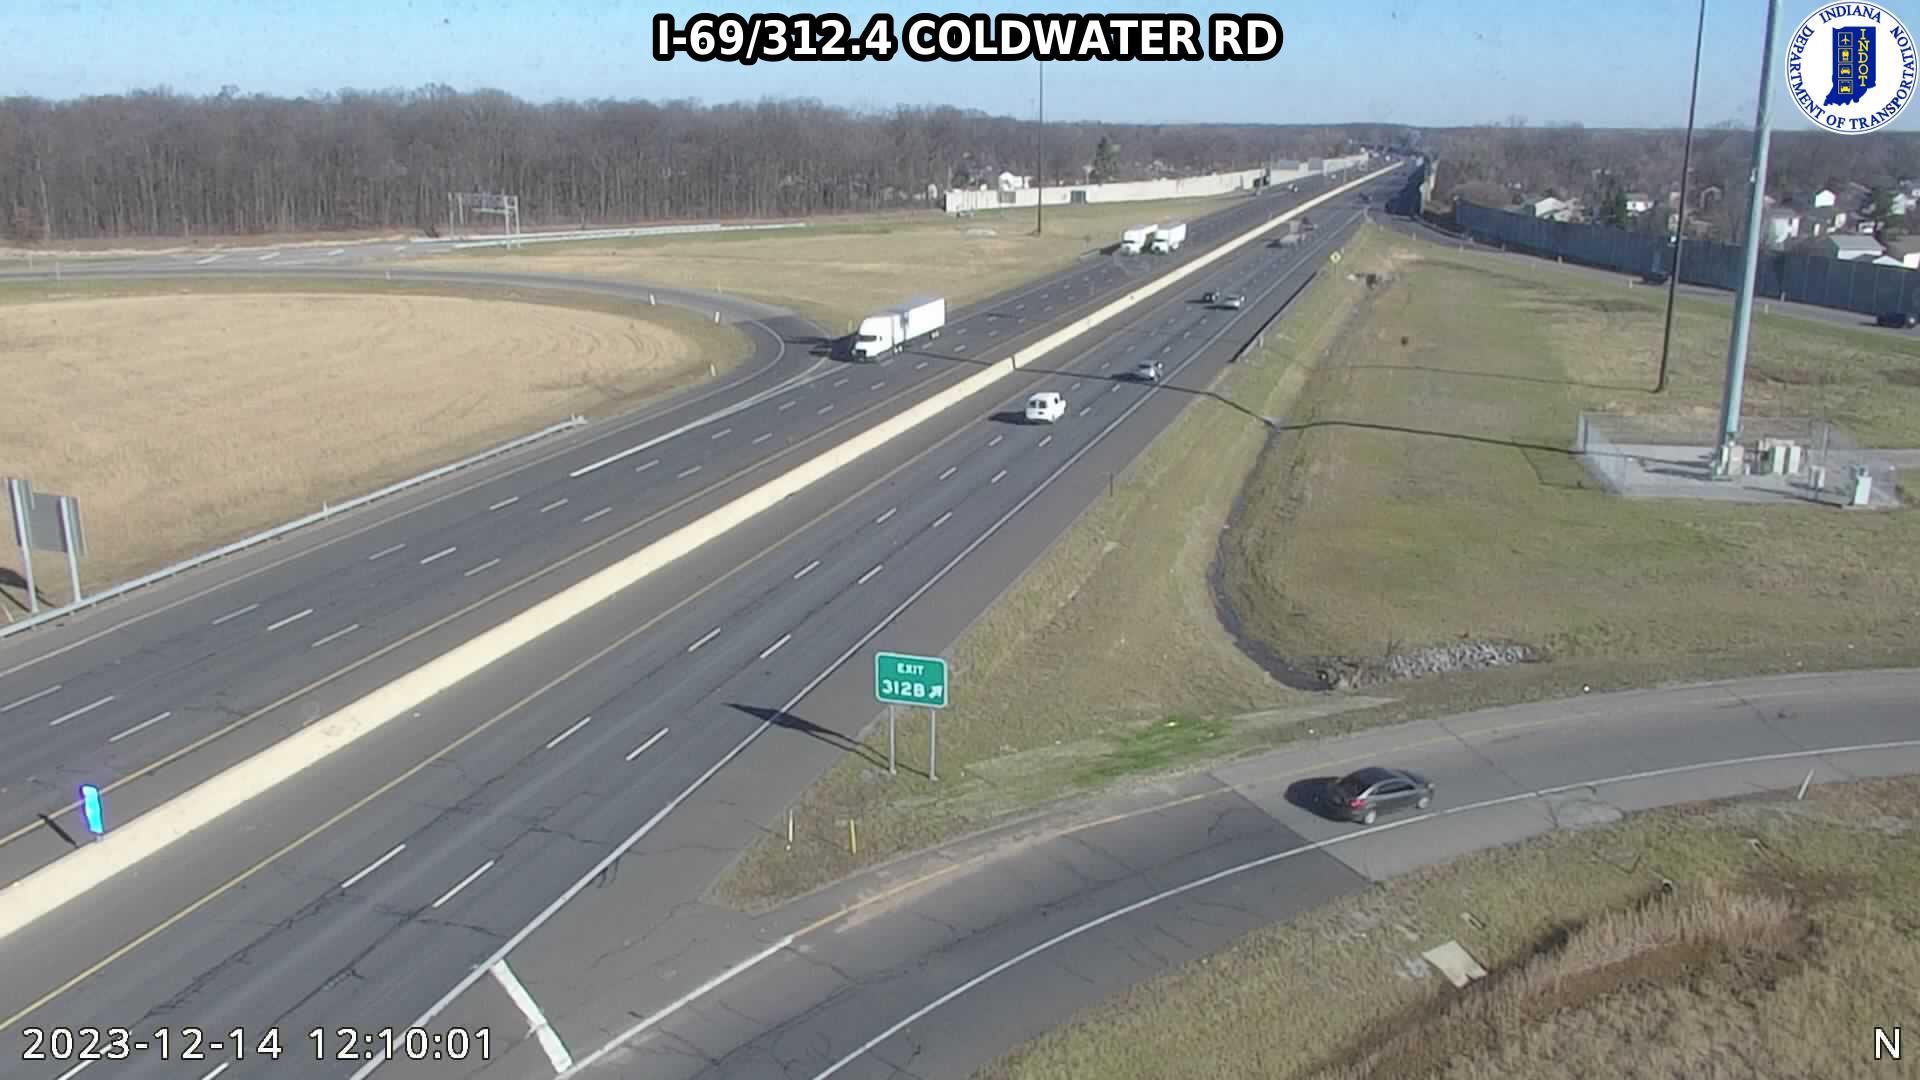 Traffic Cam Fort Wayne: I-69: I-69/312.4 COLDWATER RD Player